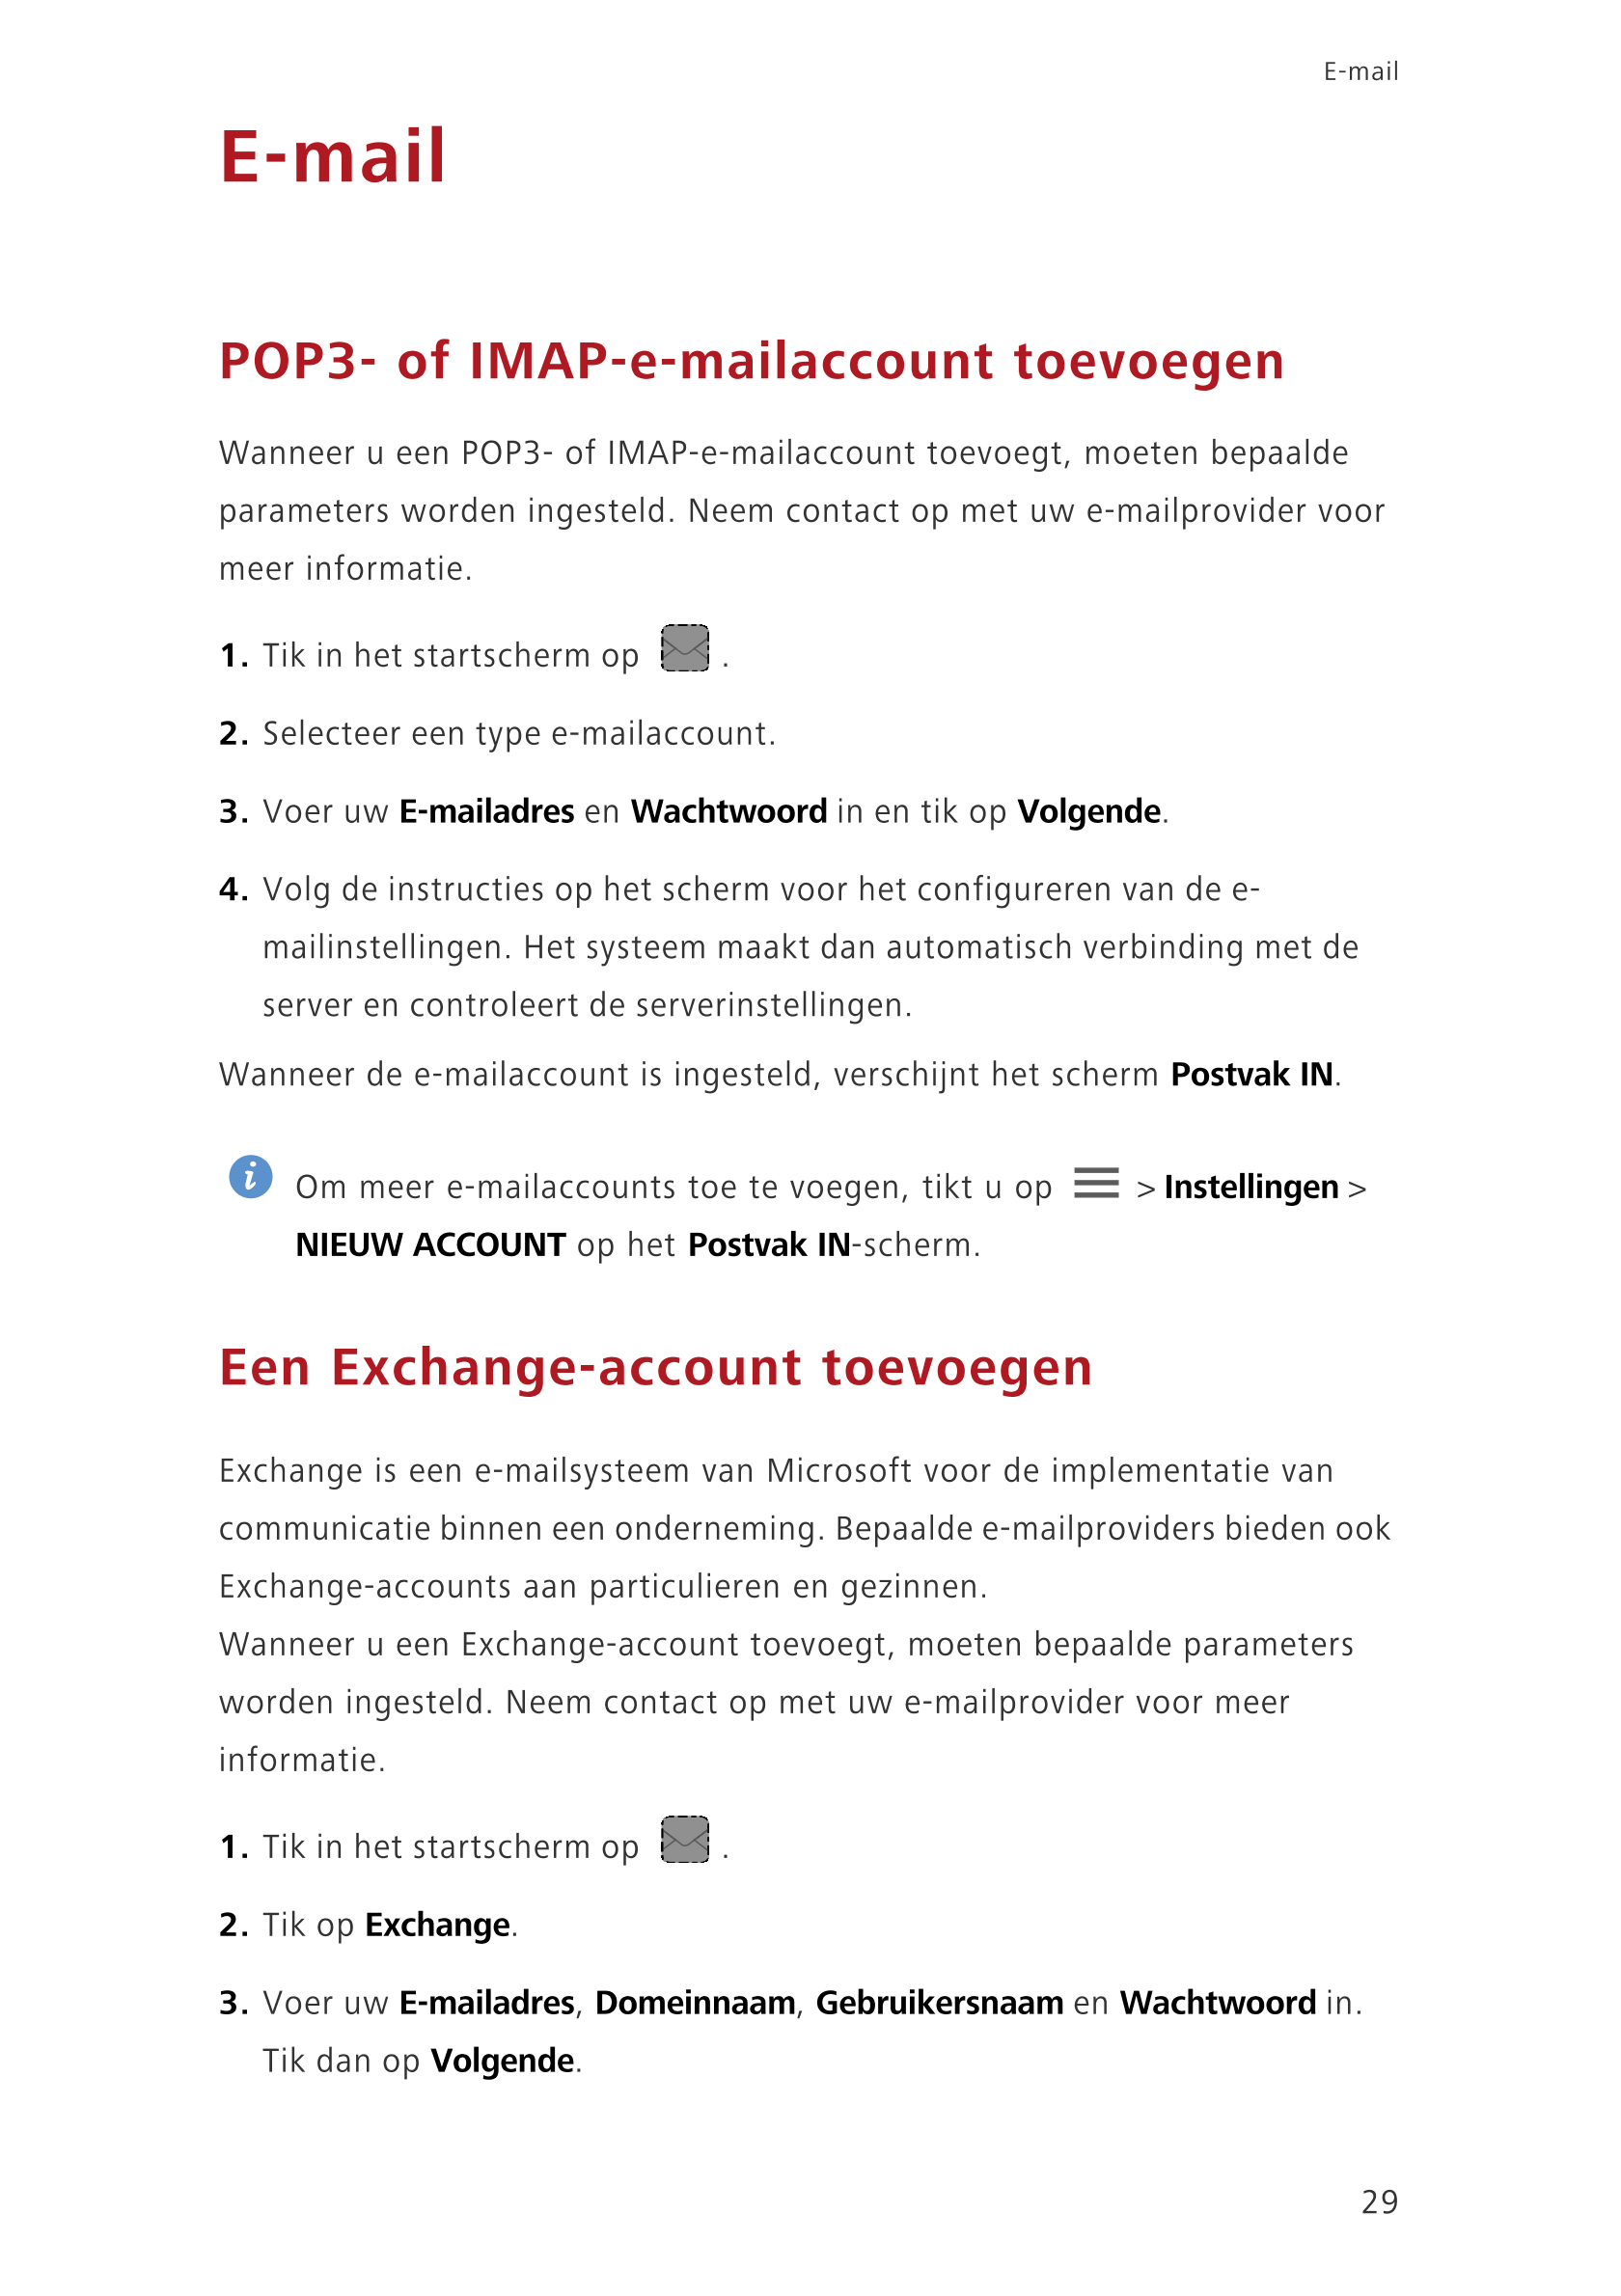 E-mail
E-mail
POP3- of IMAP-e-mailaccount toevoegen
Wanneer u een POP3- of IMAP-e-mailaccount toevoegt, moeten bepaalde 
paramet